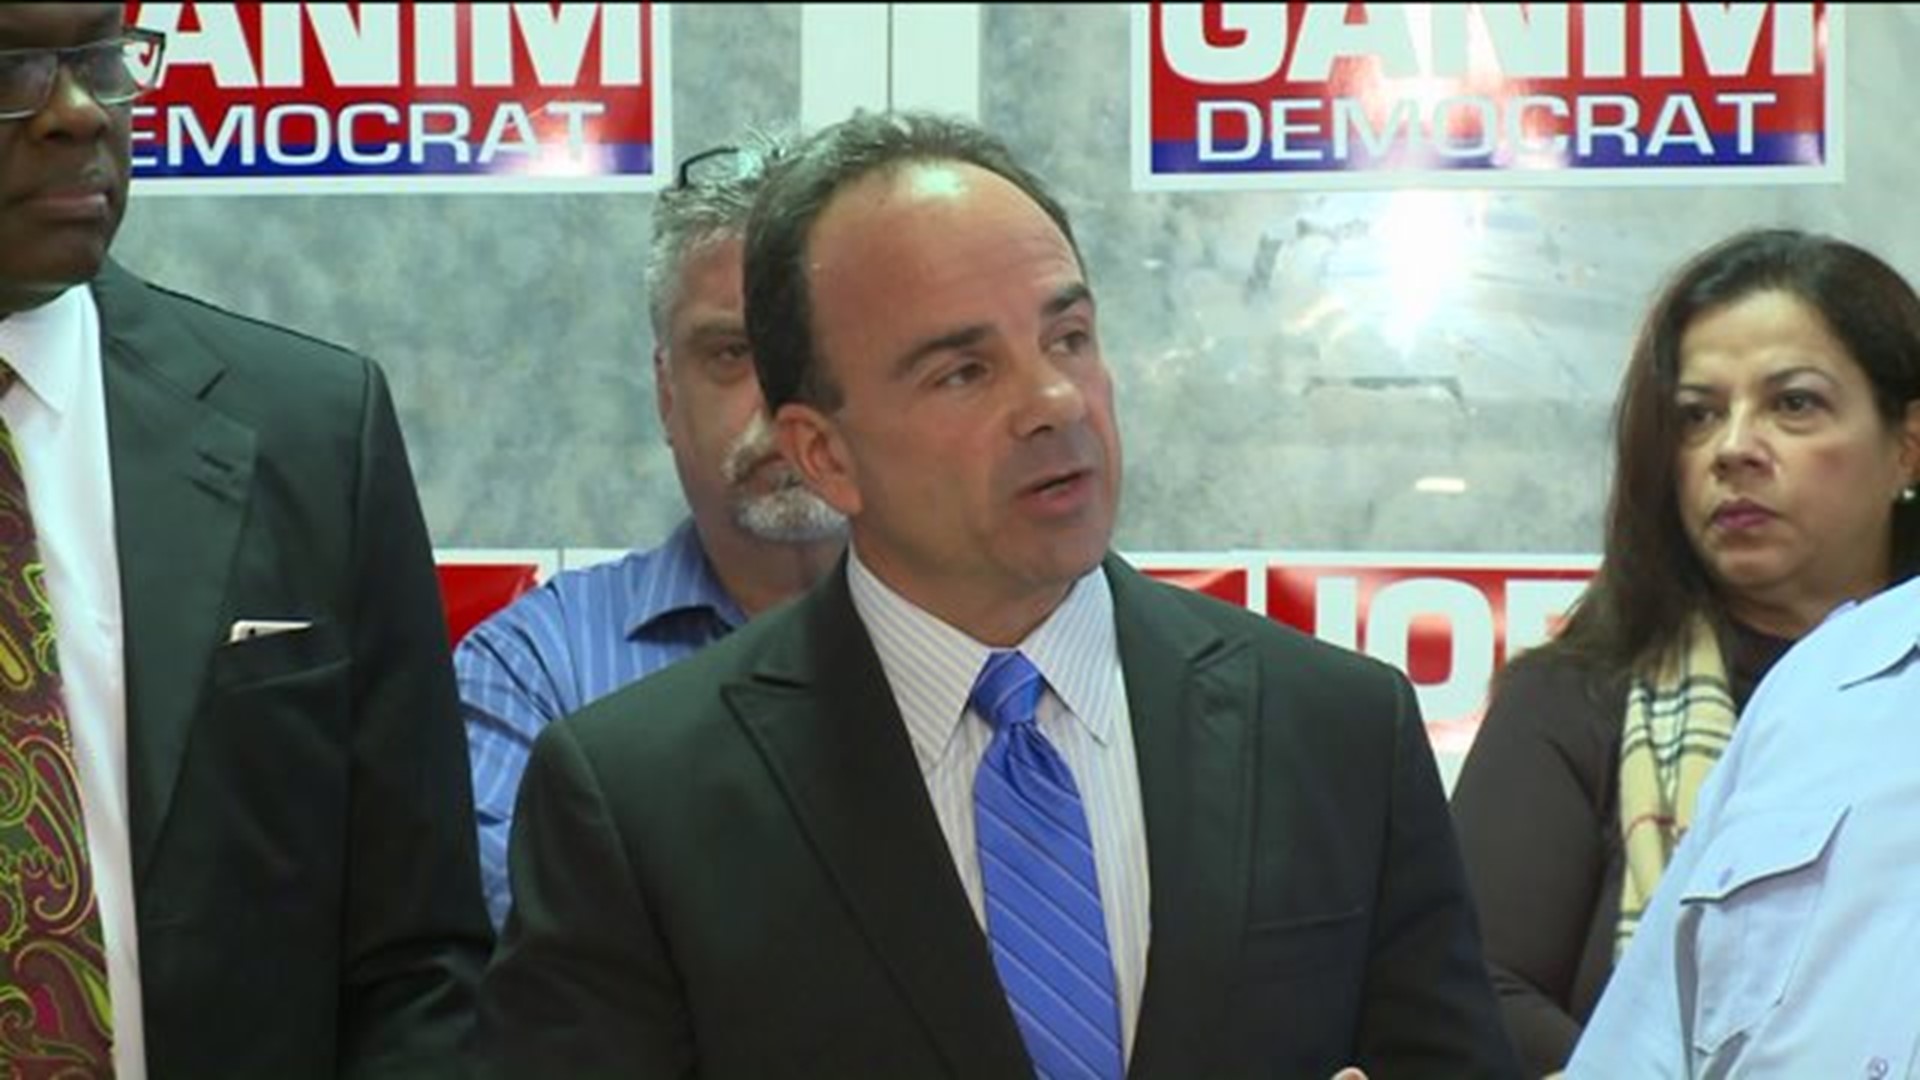 Joe Ganim discusses goals for office days after winning mayoral race